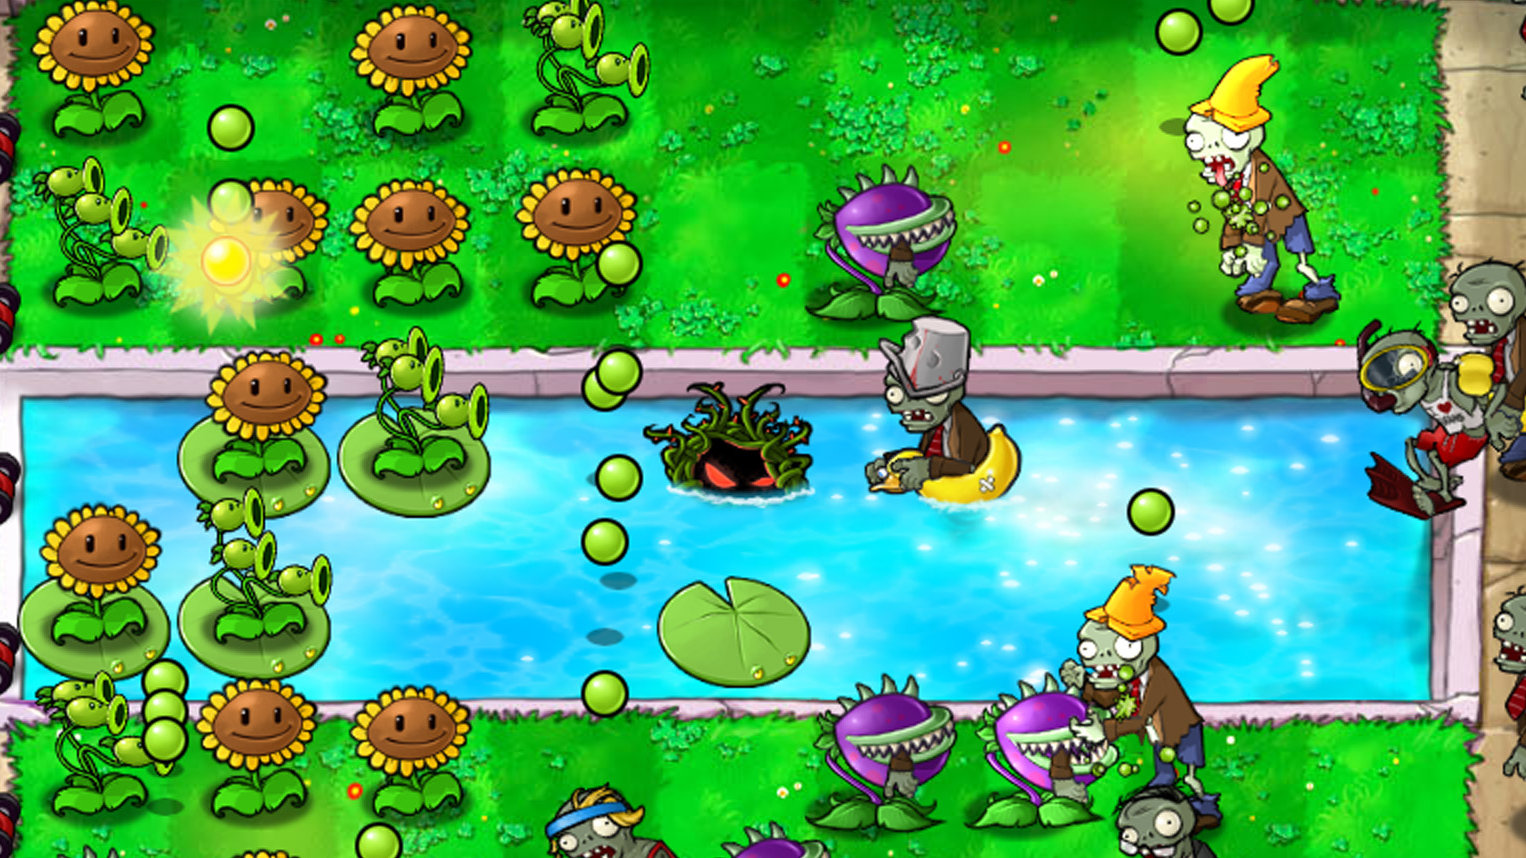 plants vs zombies 3 alpha download